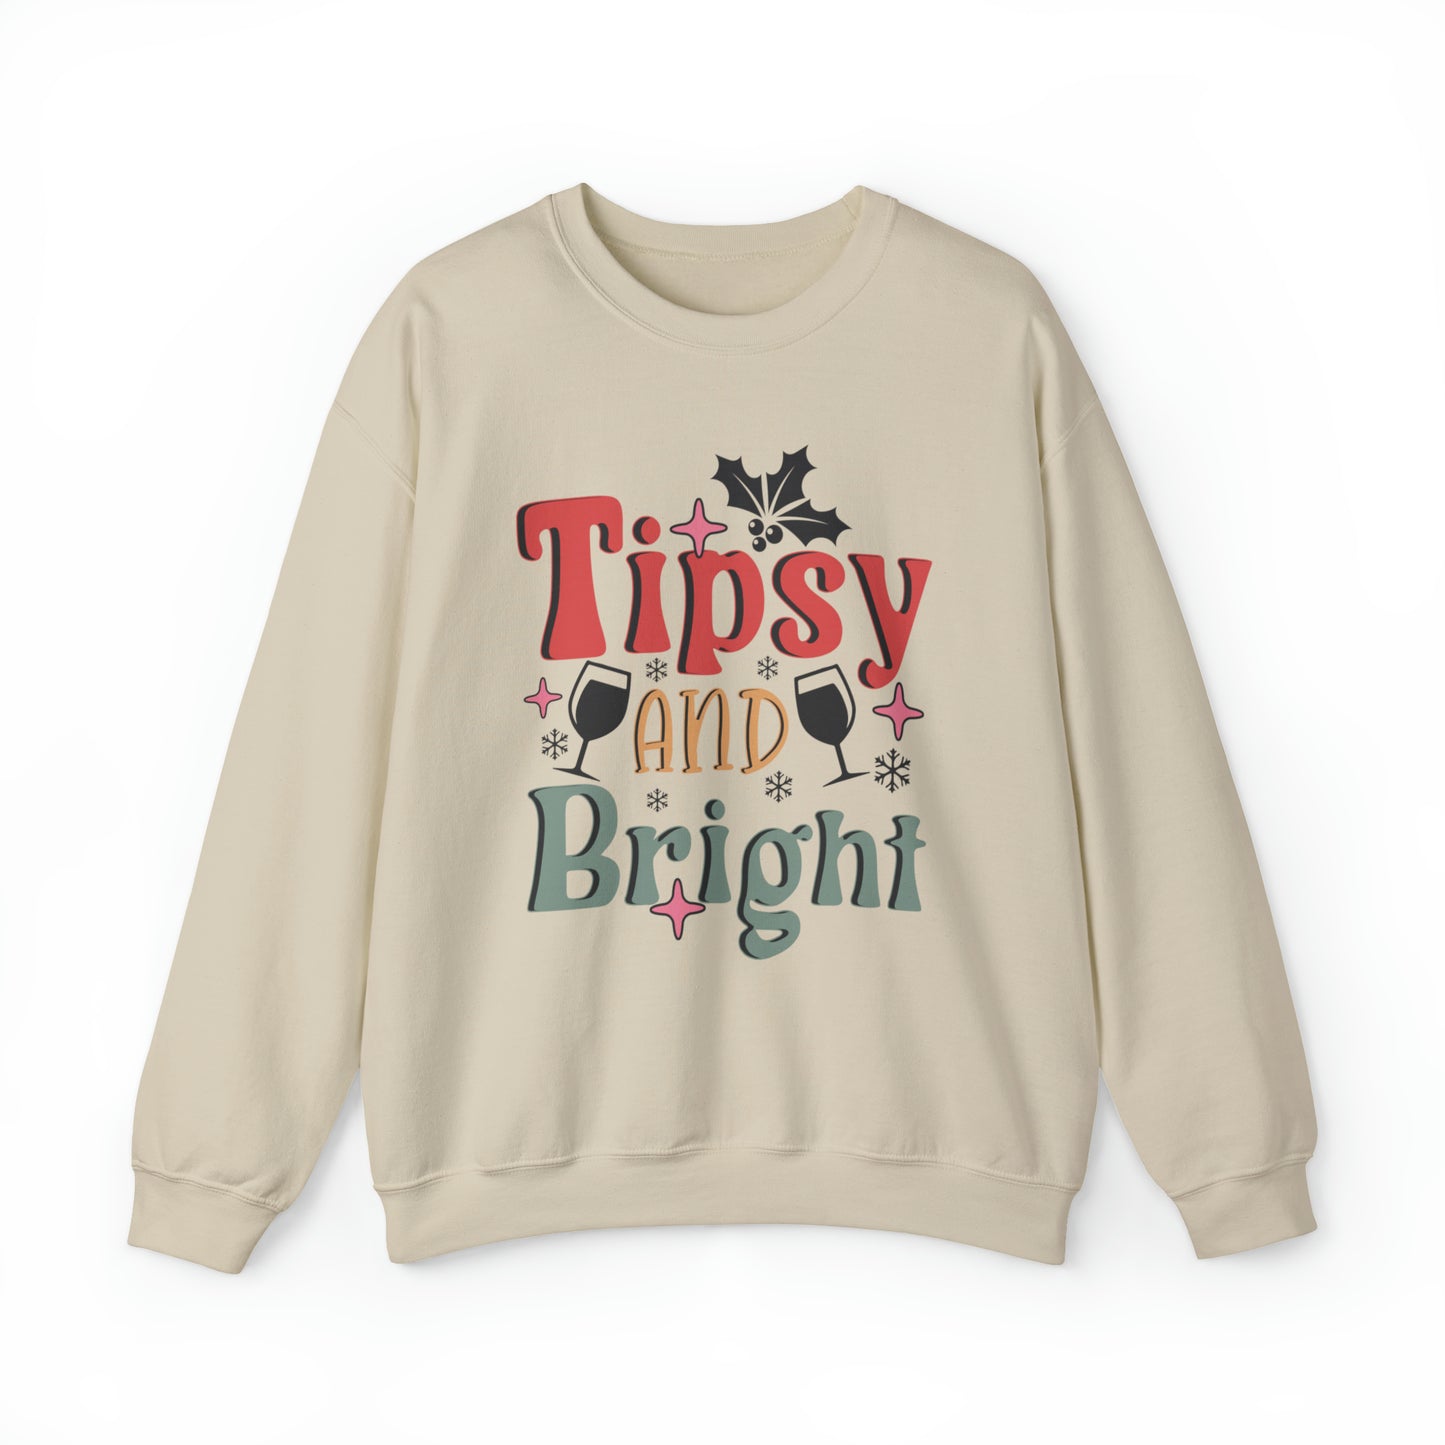 Tipsy and Bright Women's Christmas Sweatshirt